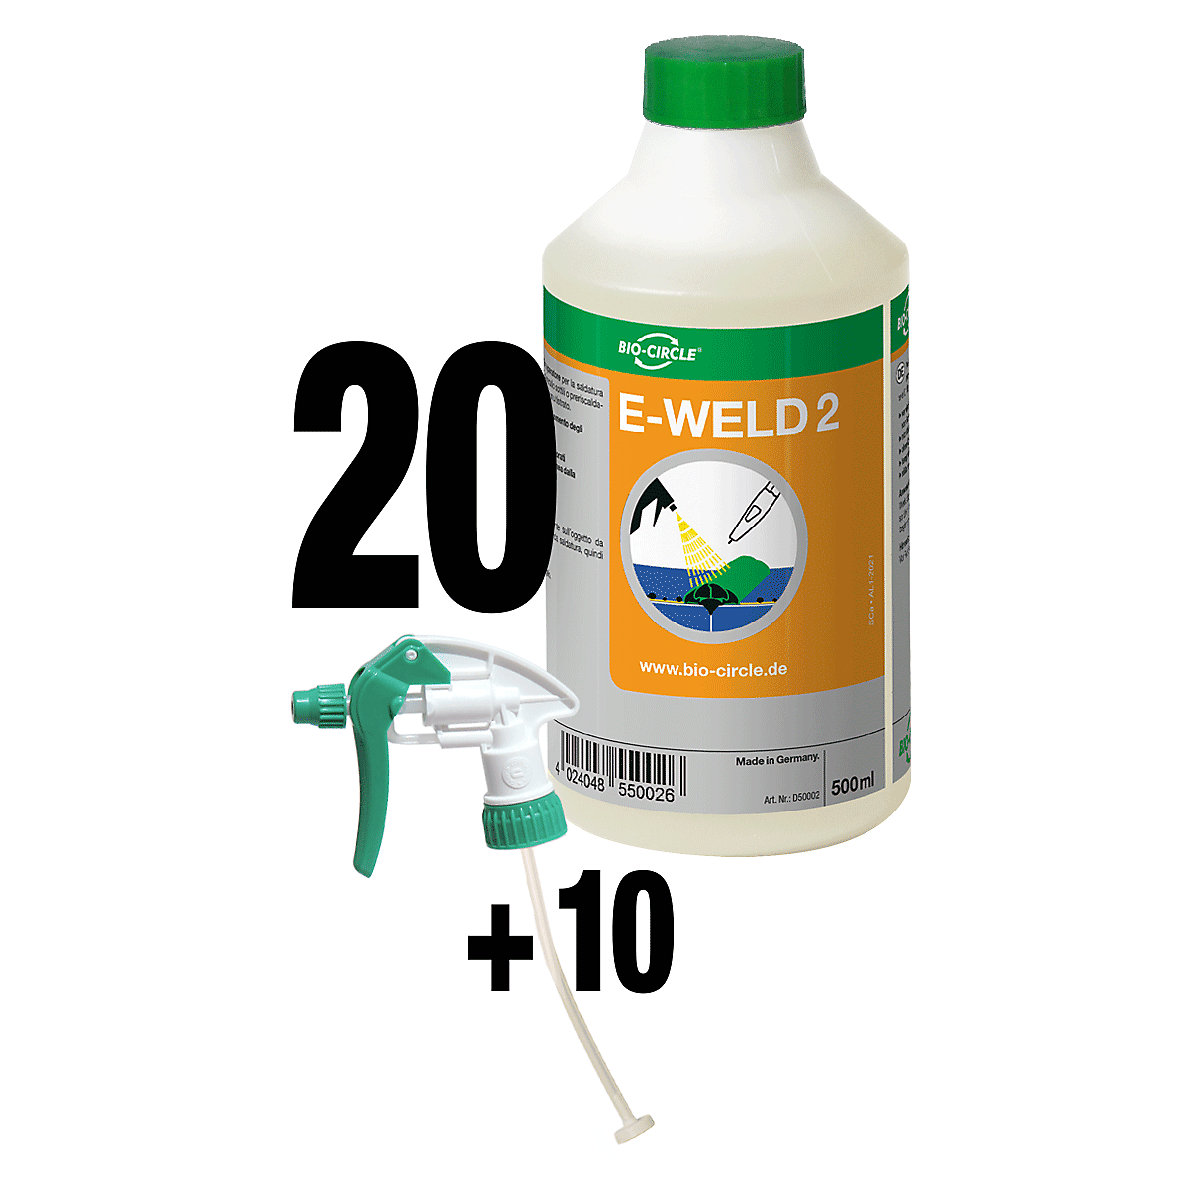 E-WELD 2 welding protection spray - Bio-Circle